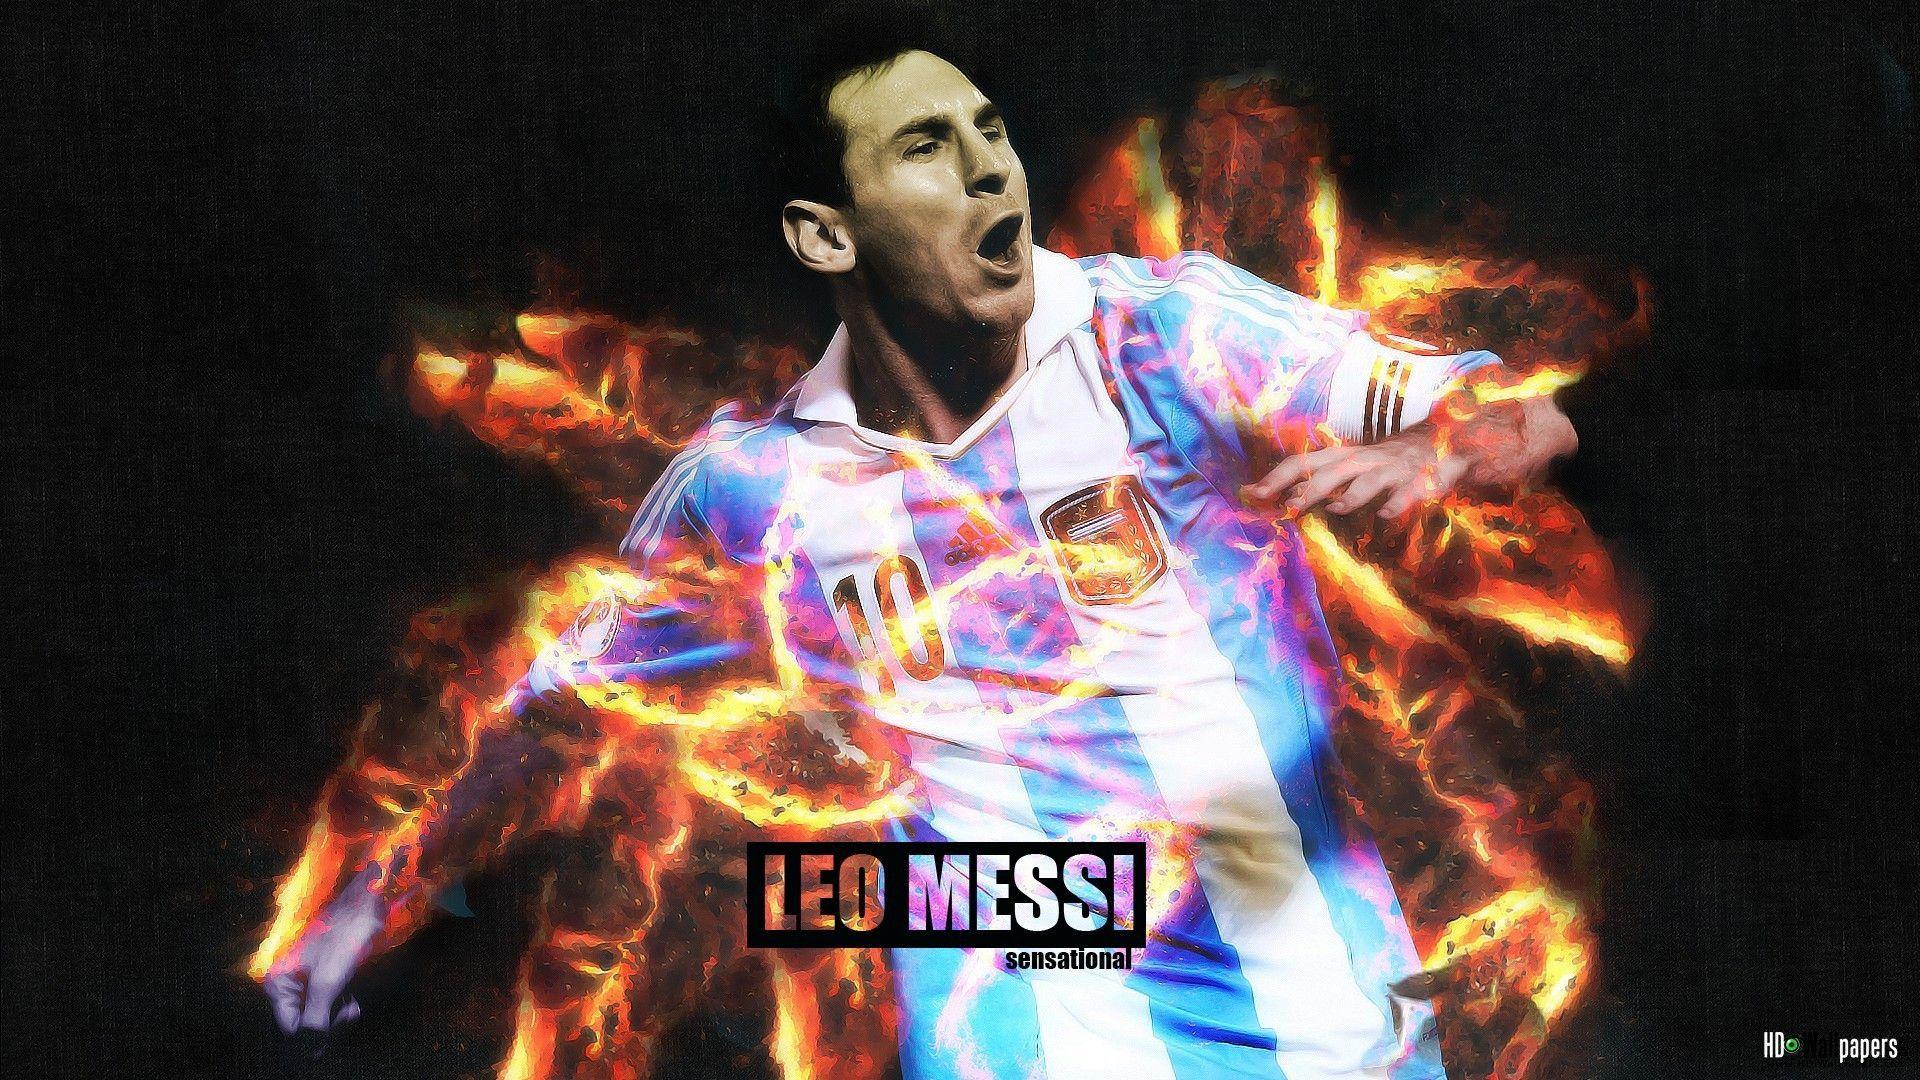 Free Download 40 Lionel Messi HD Wallpaper